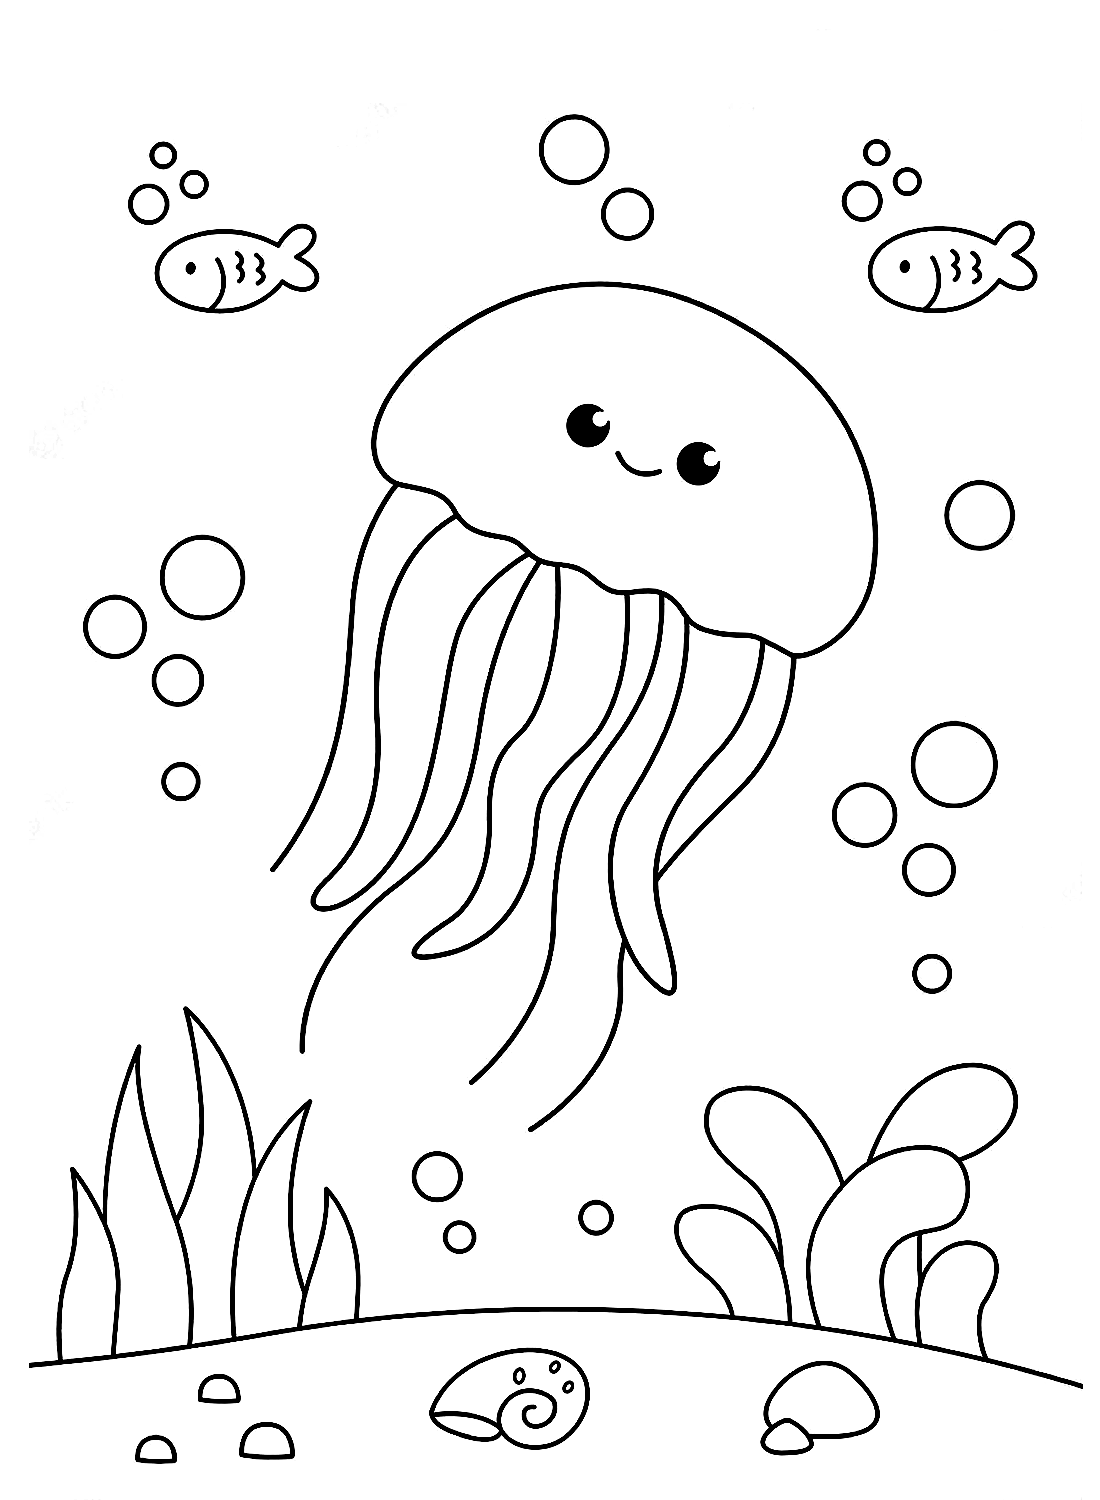 Página para colorir de água-viva imprimível gratuita